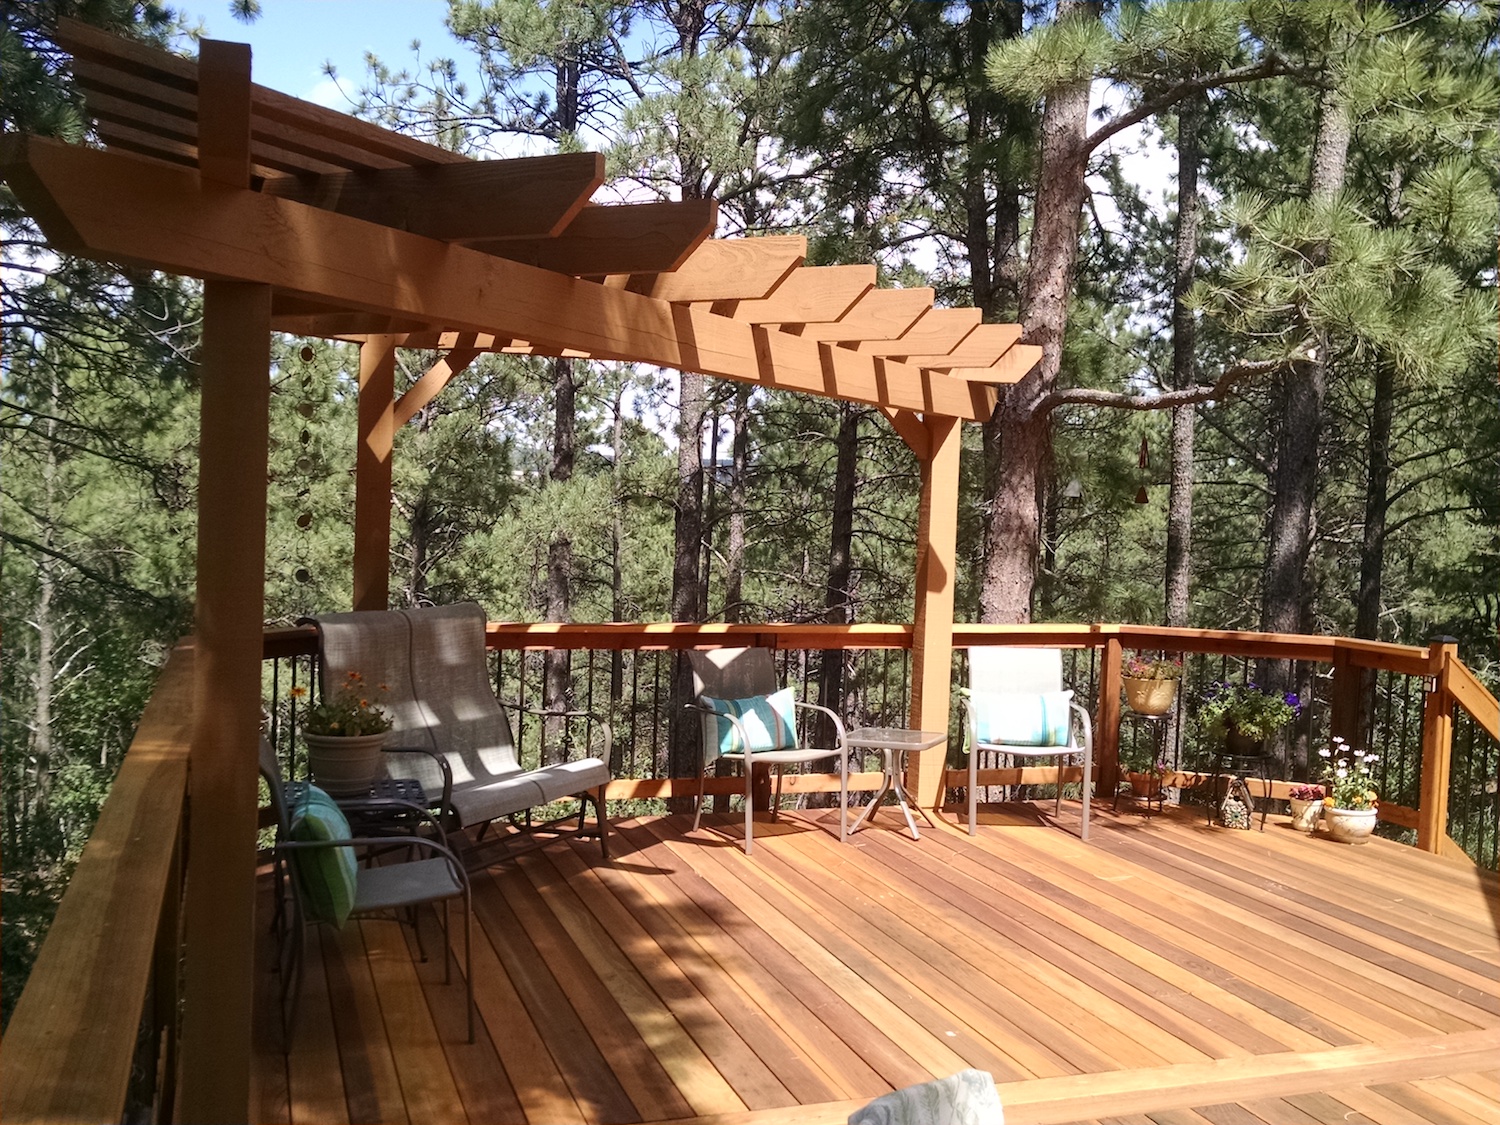 Tri-corner cedar pergola built on a b-grade redwood deck